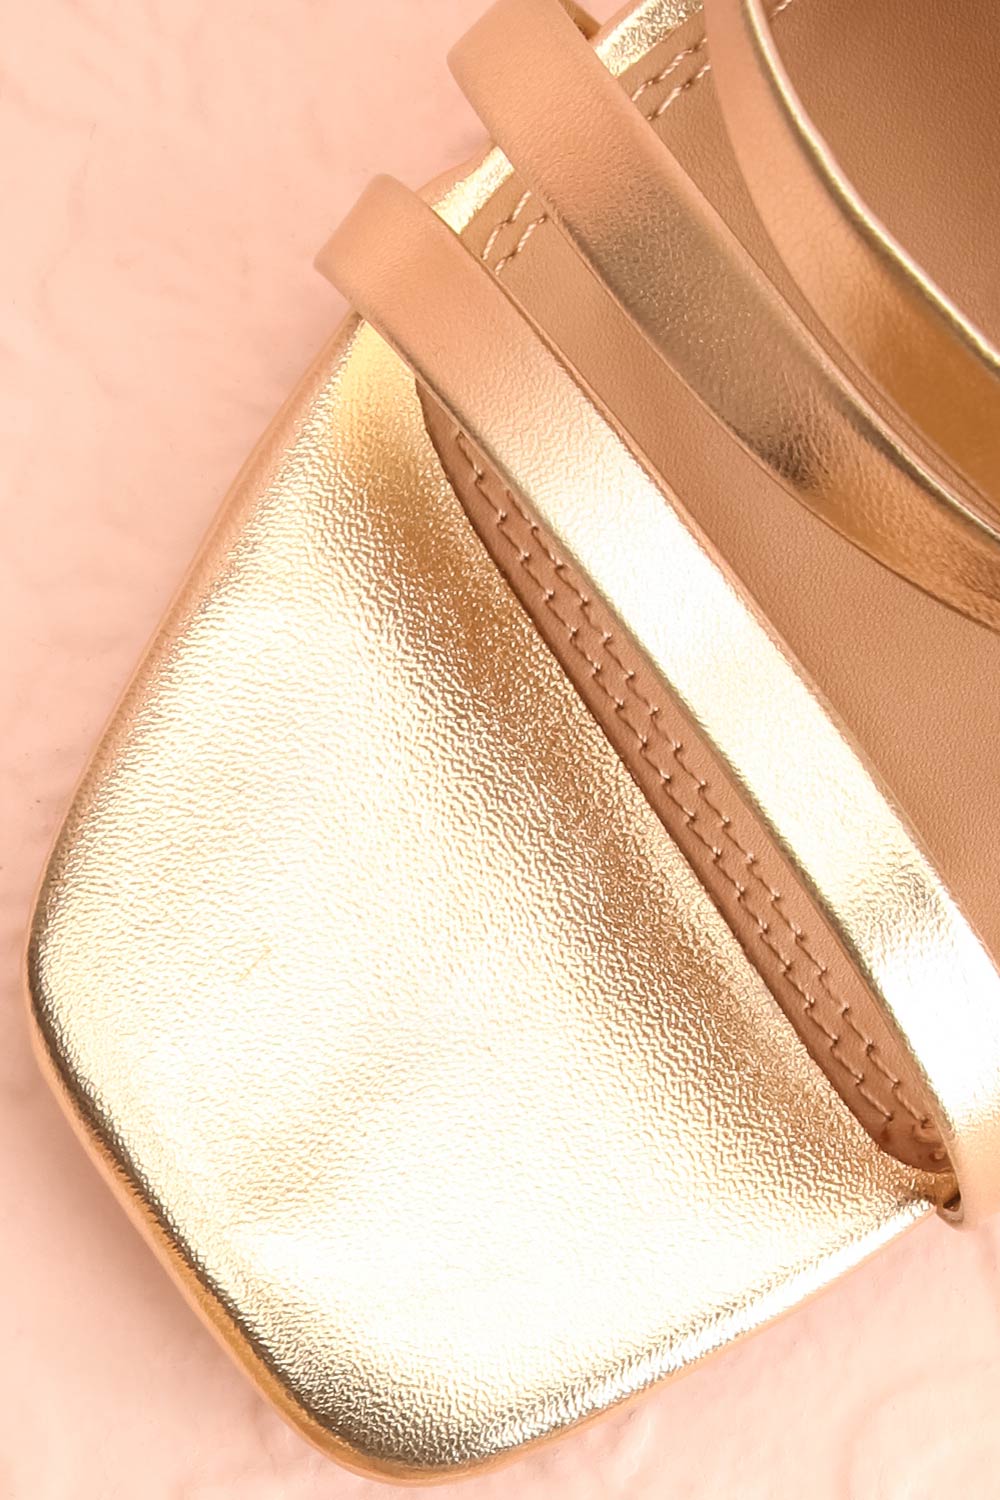 Mouvemente Gold Crossed Strap High Heel Sandals | Boutique 1861 flat close-up